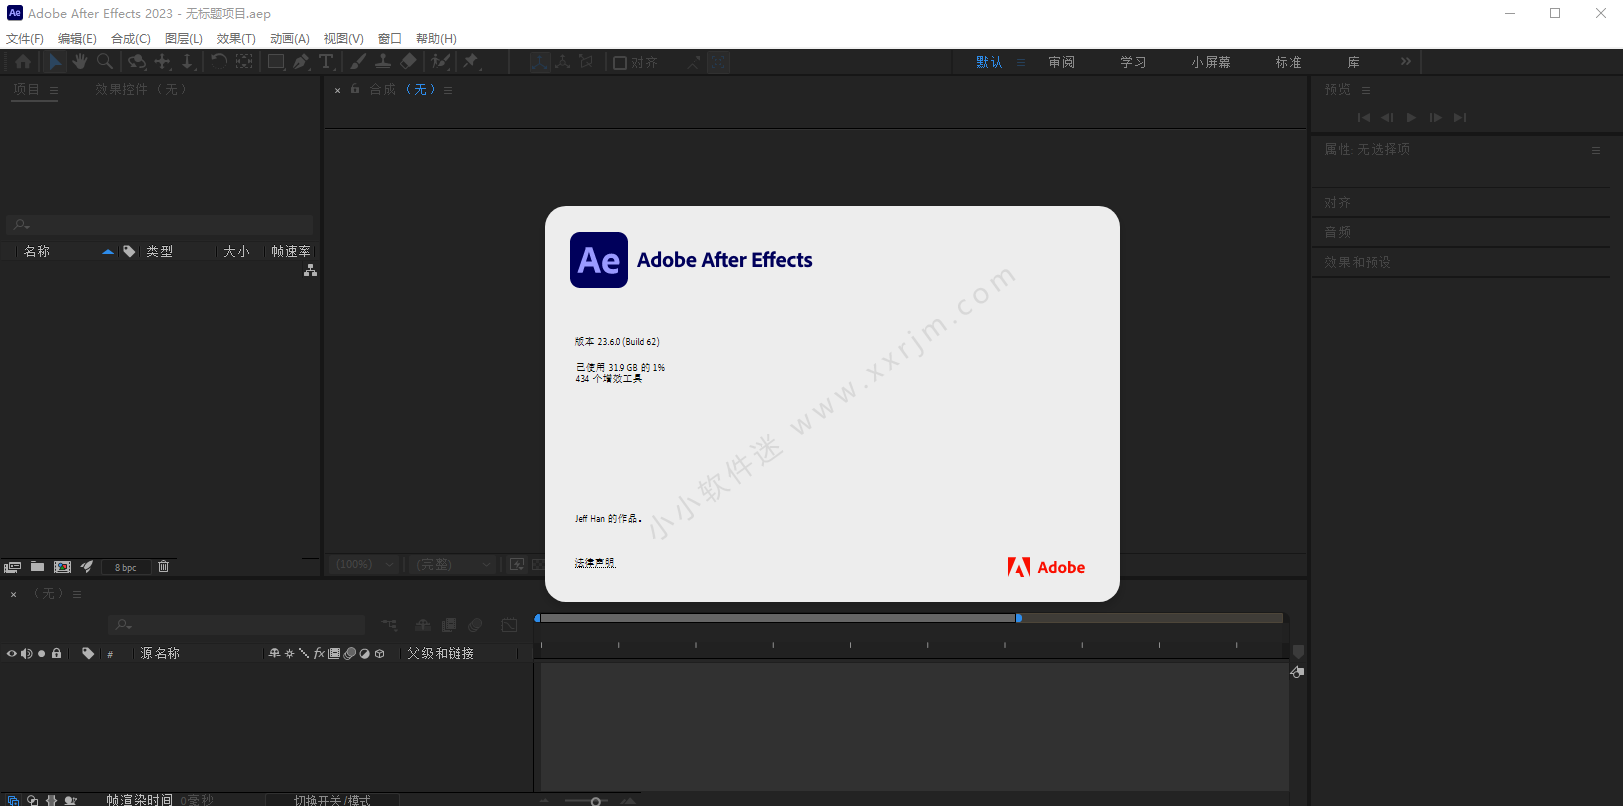 Adobe After Effects 2023 v23.6.0.62一键直装破解版(AE2023)